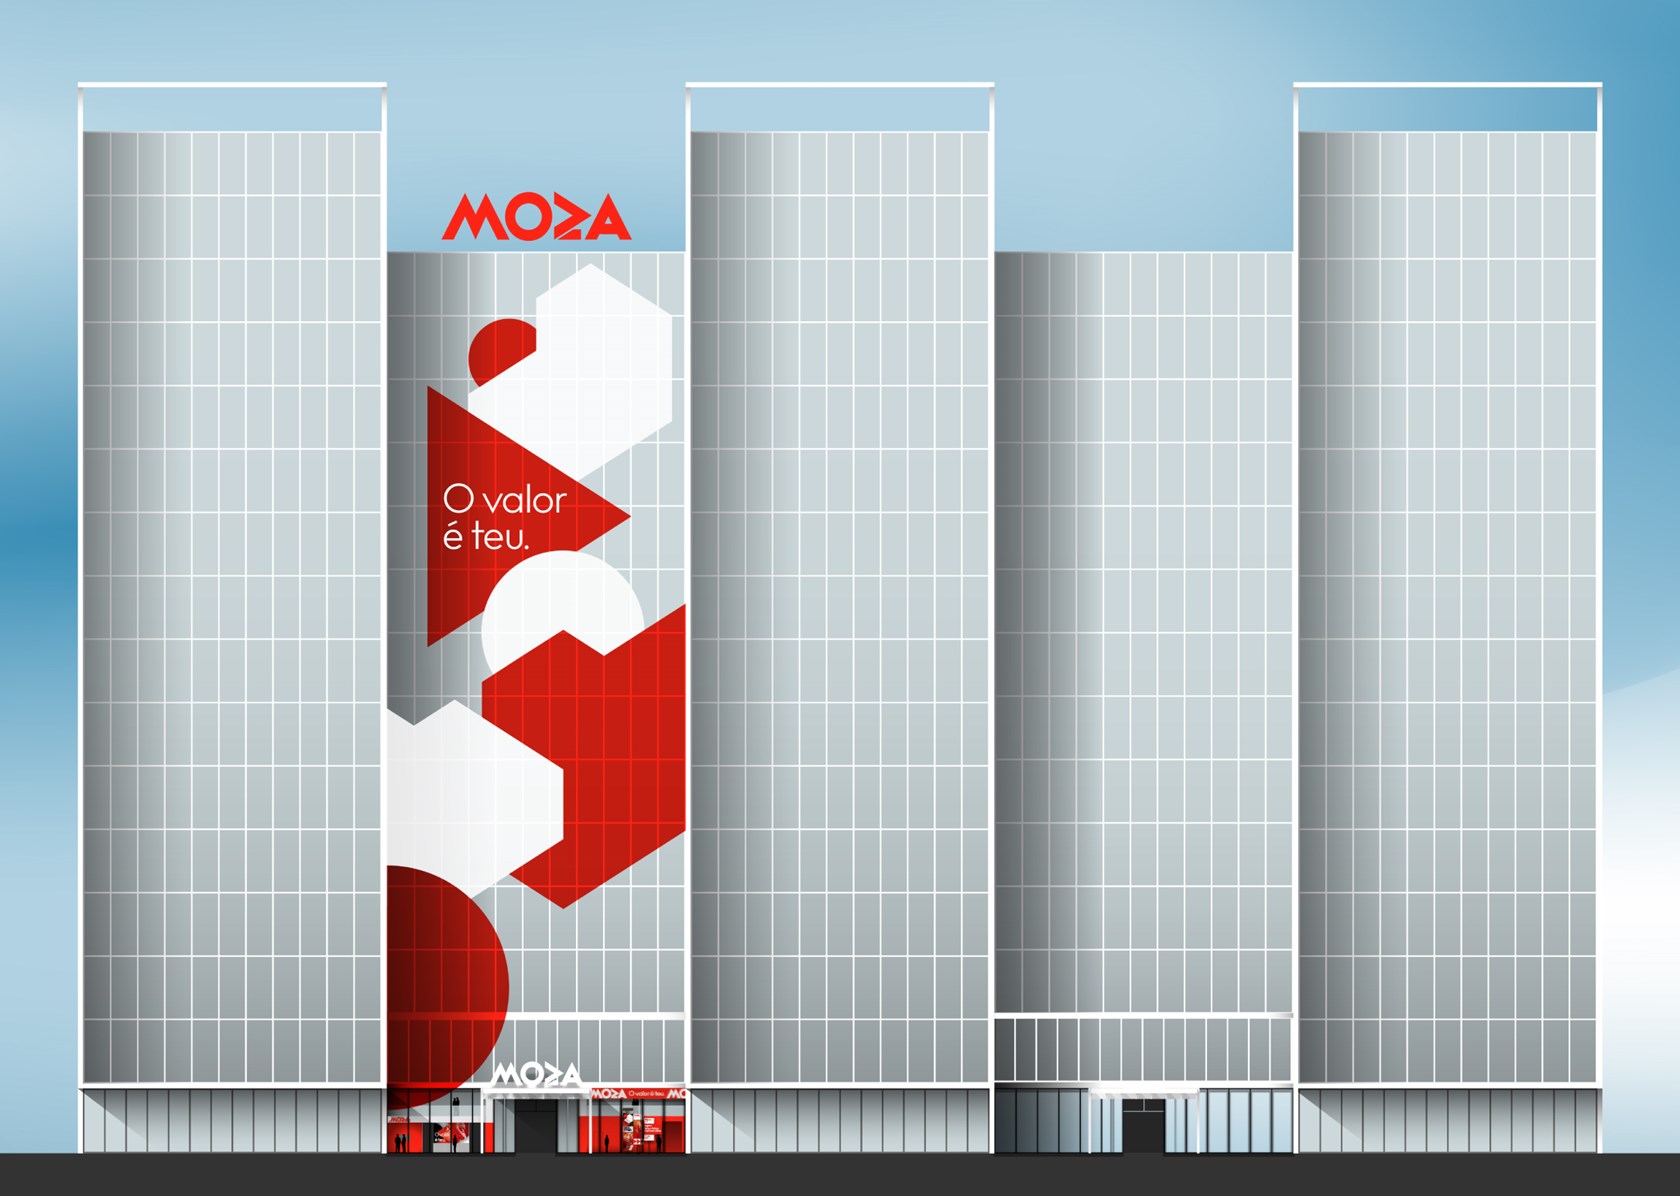 MOZA Banco — Building a brand, branding the building